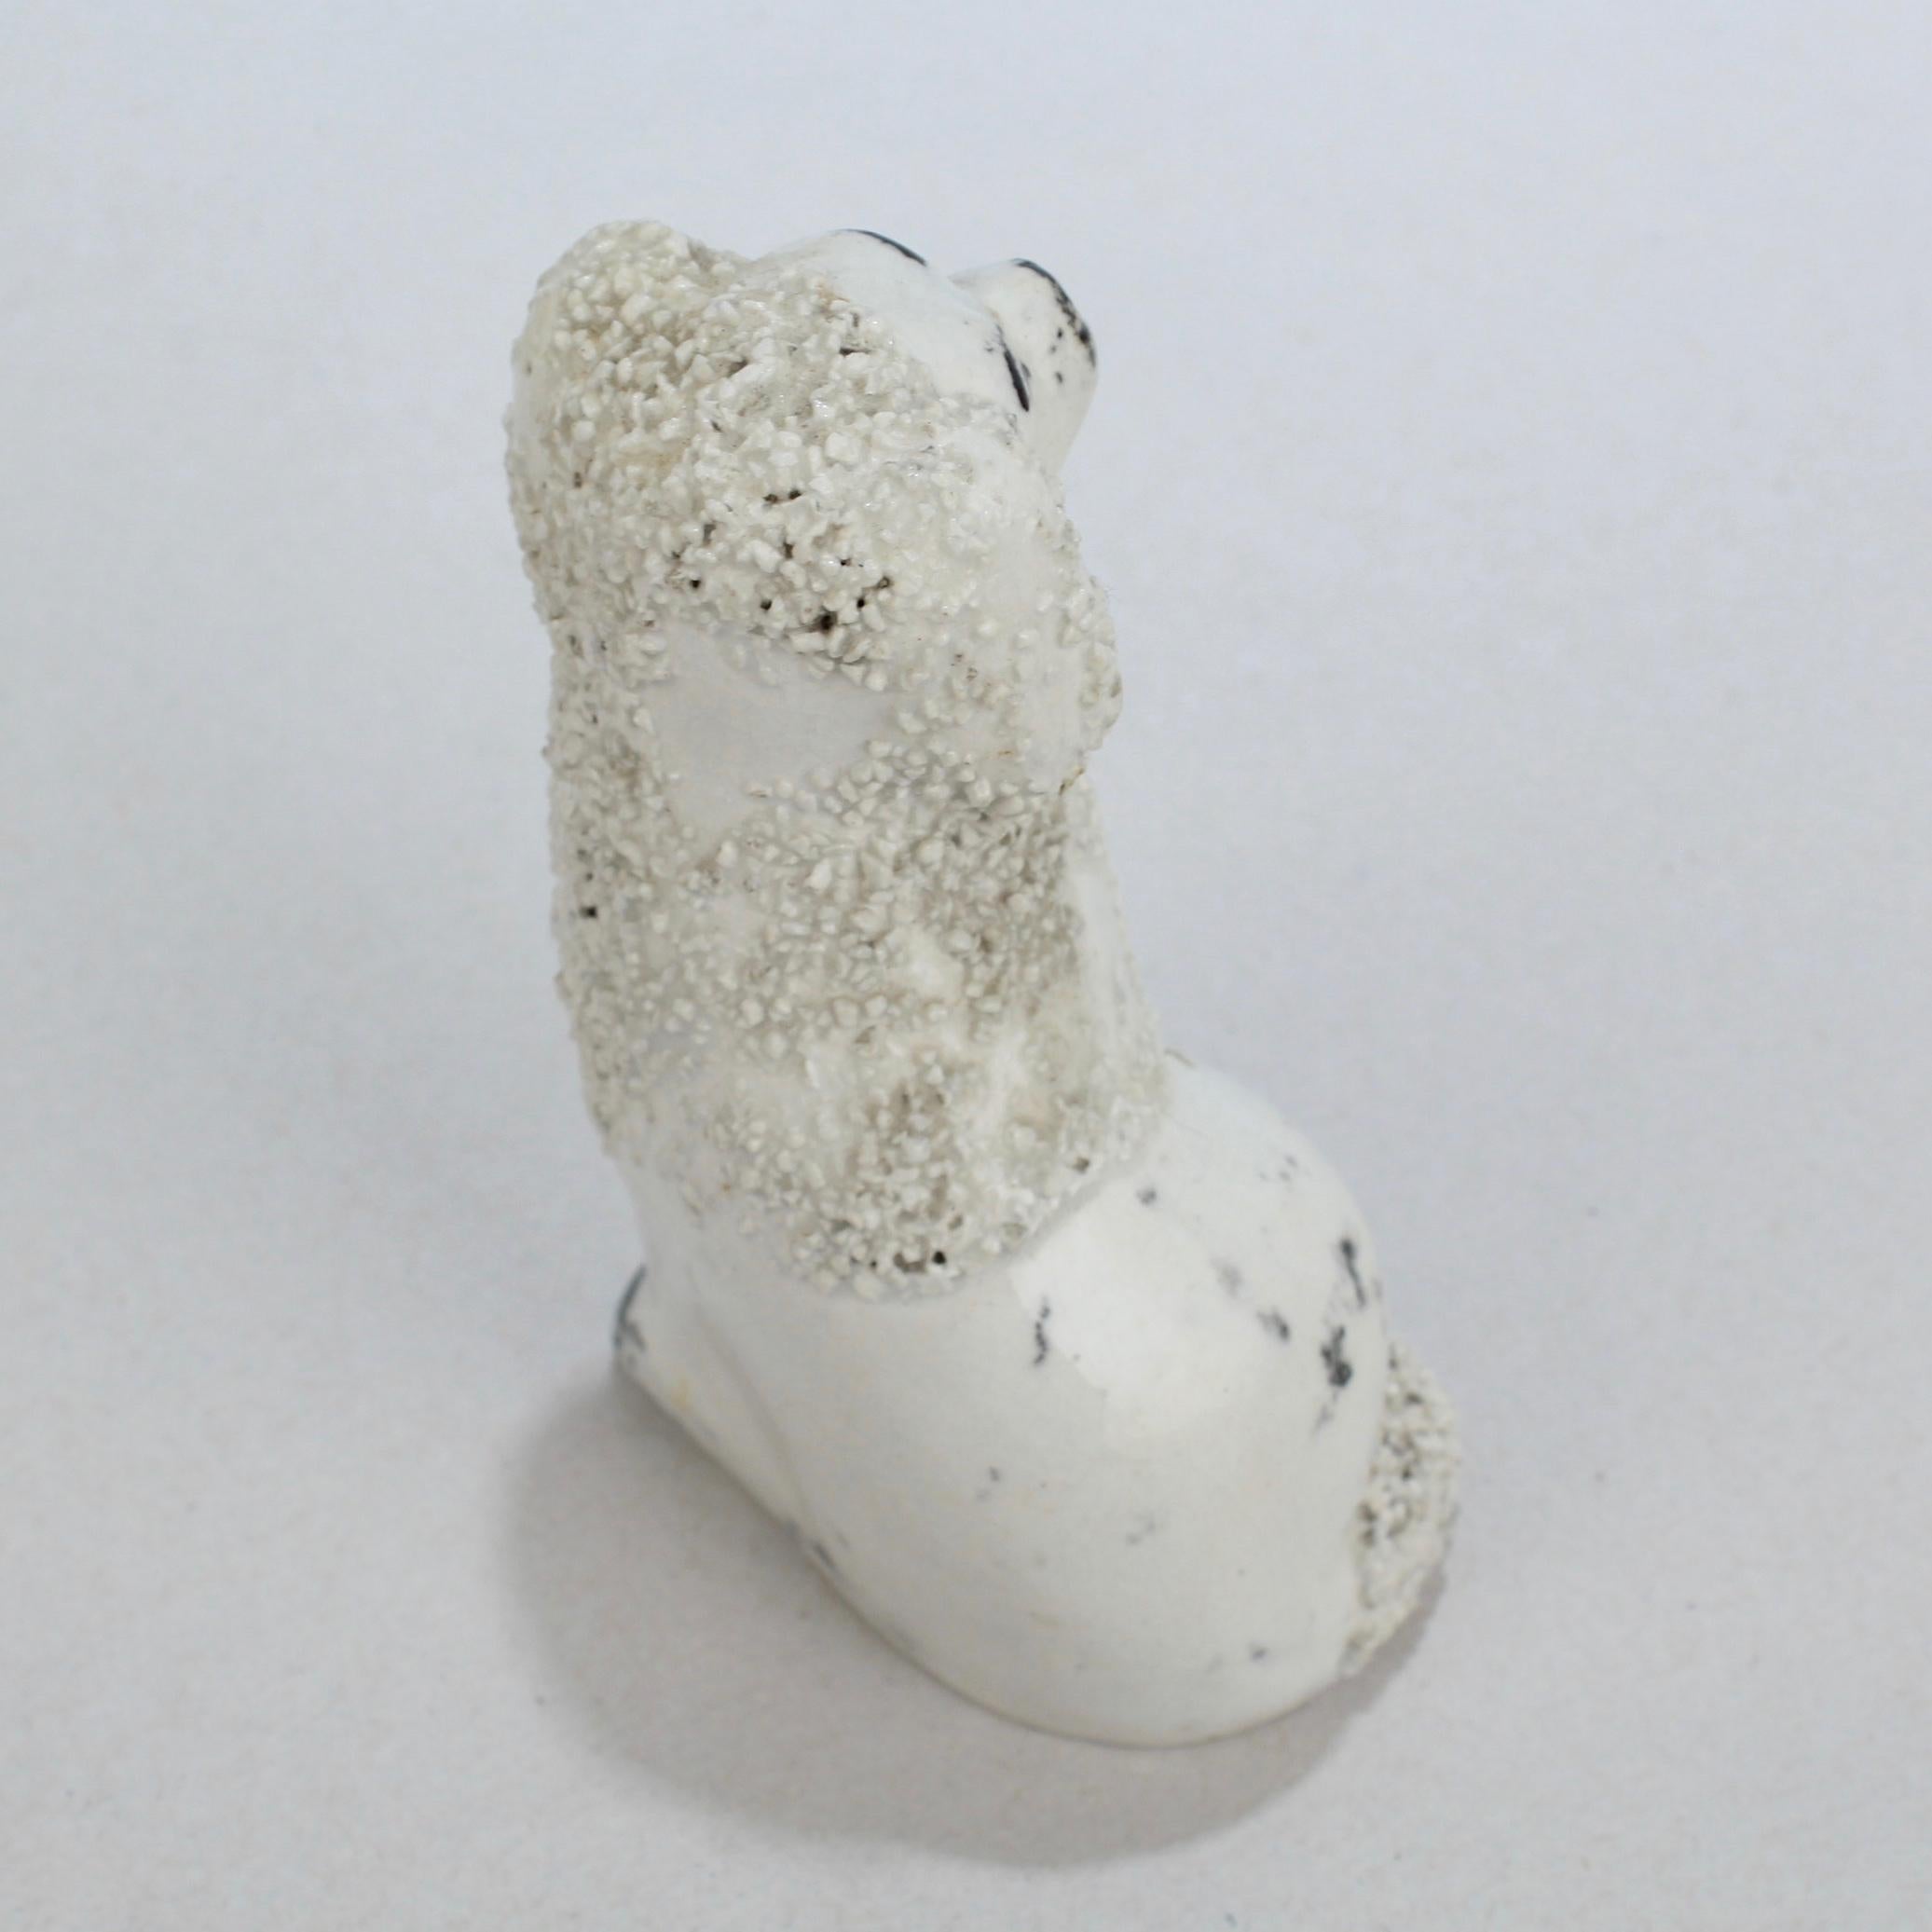 Antique Miniature Staffordshire Pottery Spaniel Dog Figurine with Confetti Fur For Sale 3